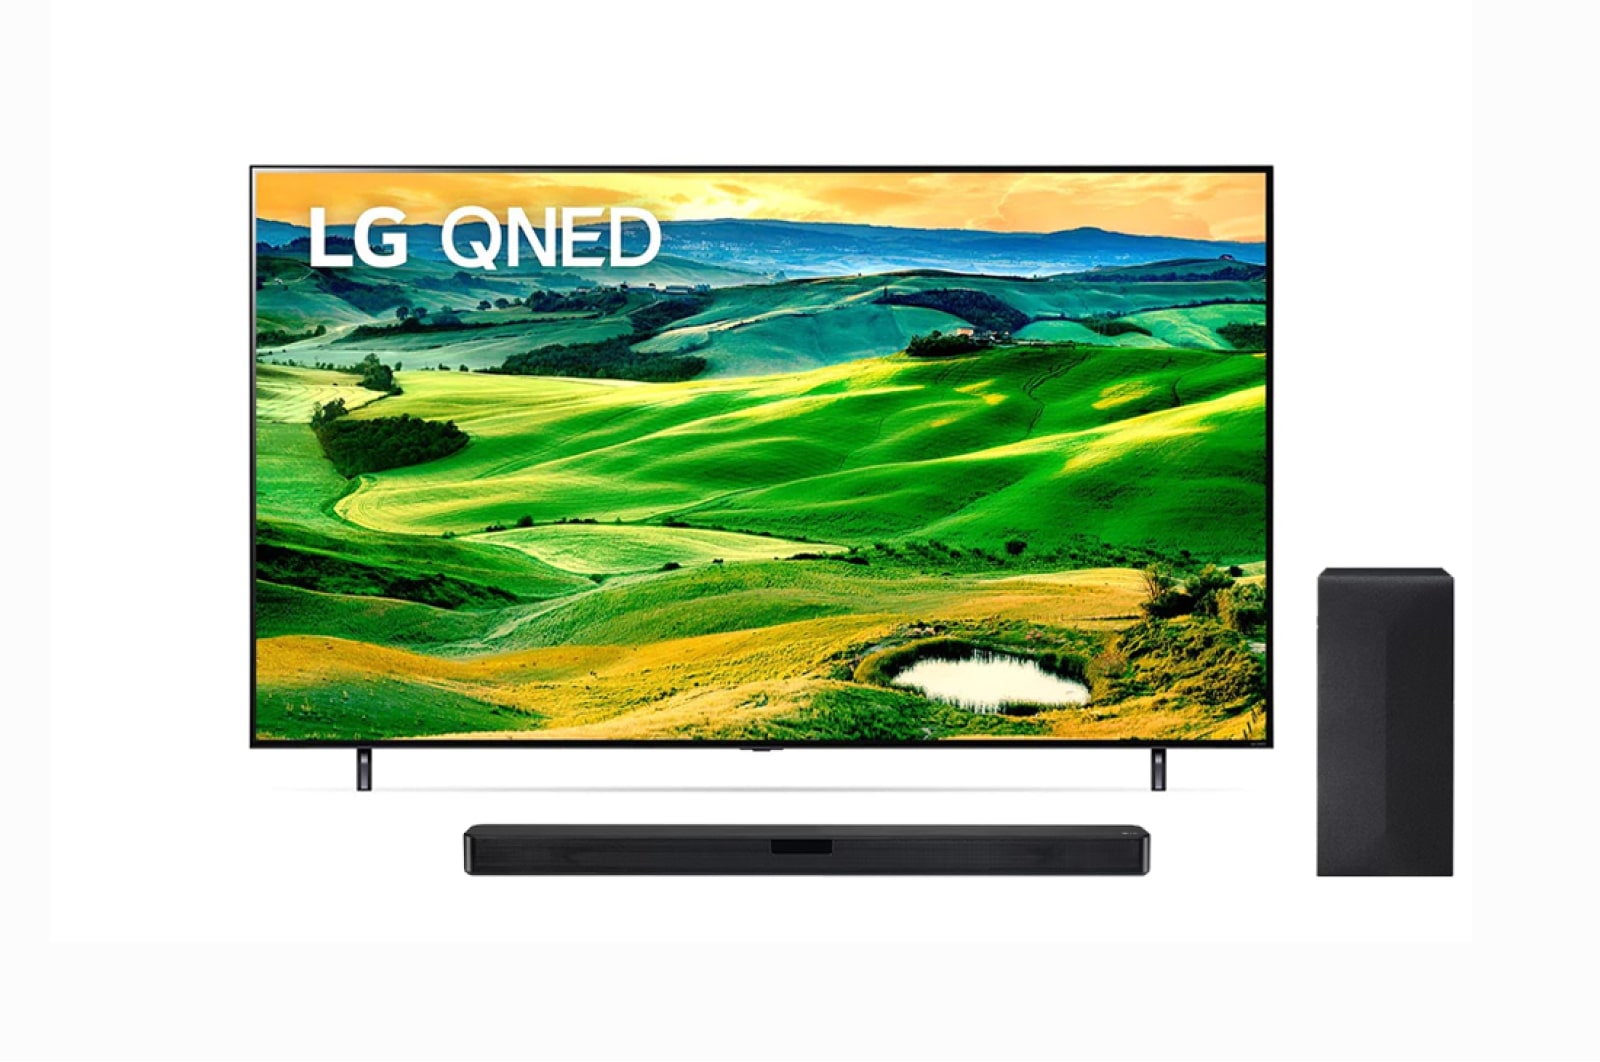 Find Smart, High-Quality tv digital decodificador for All TVs 